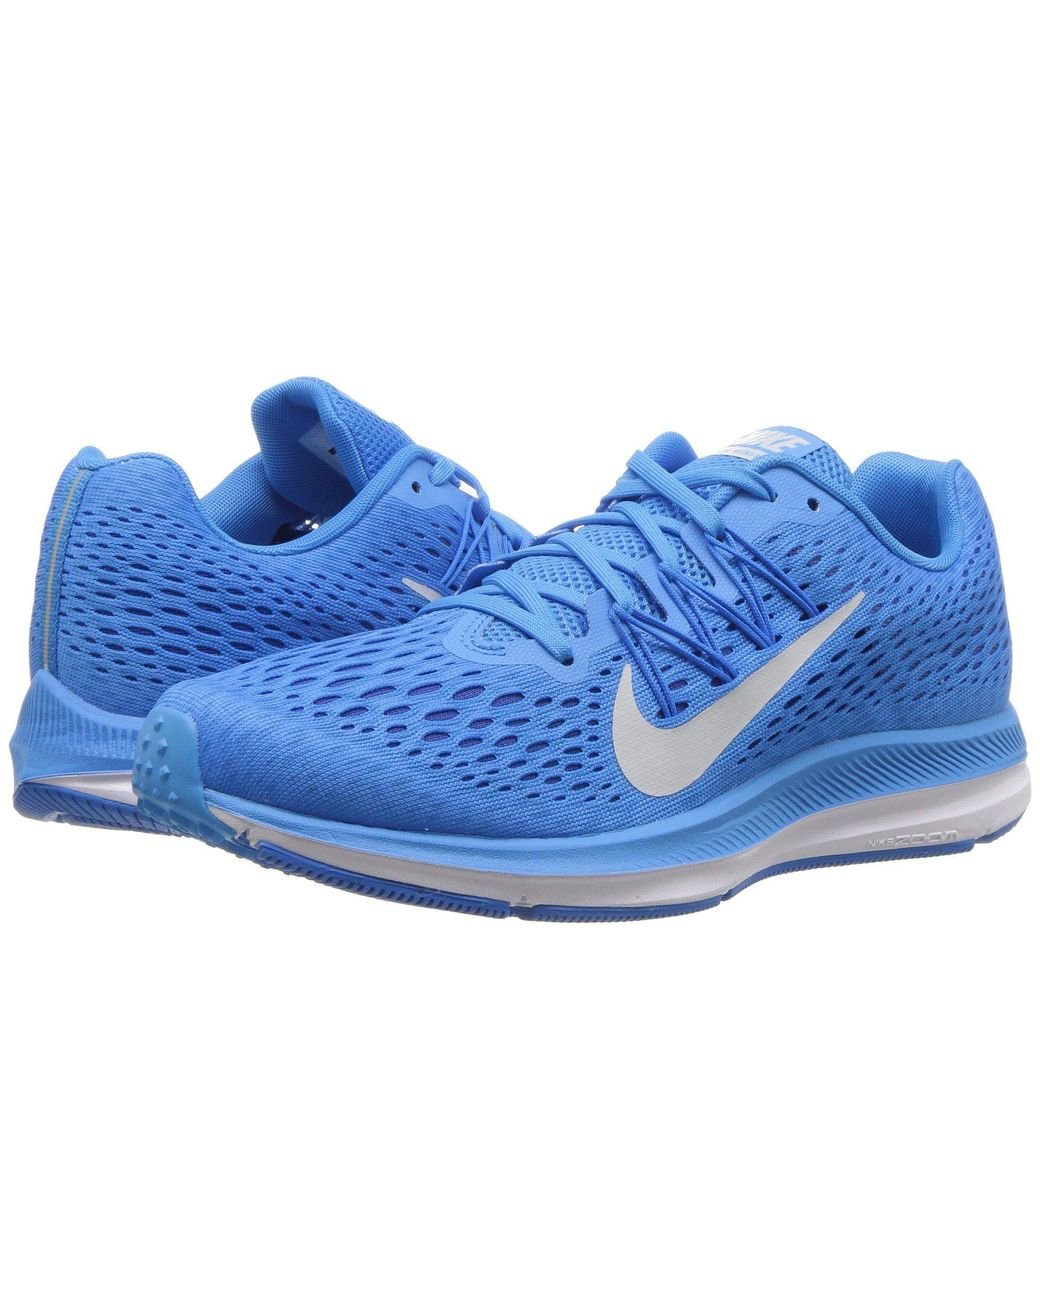 Nike Air Zoom Winflo (obsidian/summit White/dark Obsidian) Women's Running Shoes in Blue | Lyst